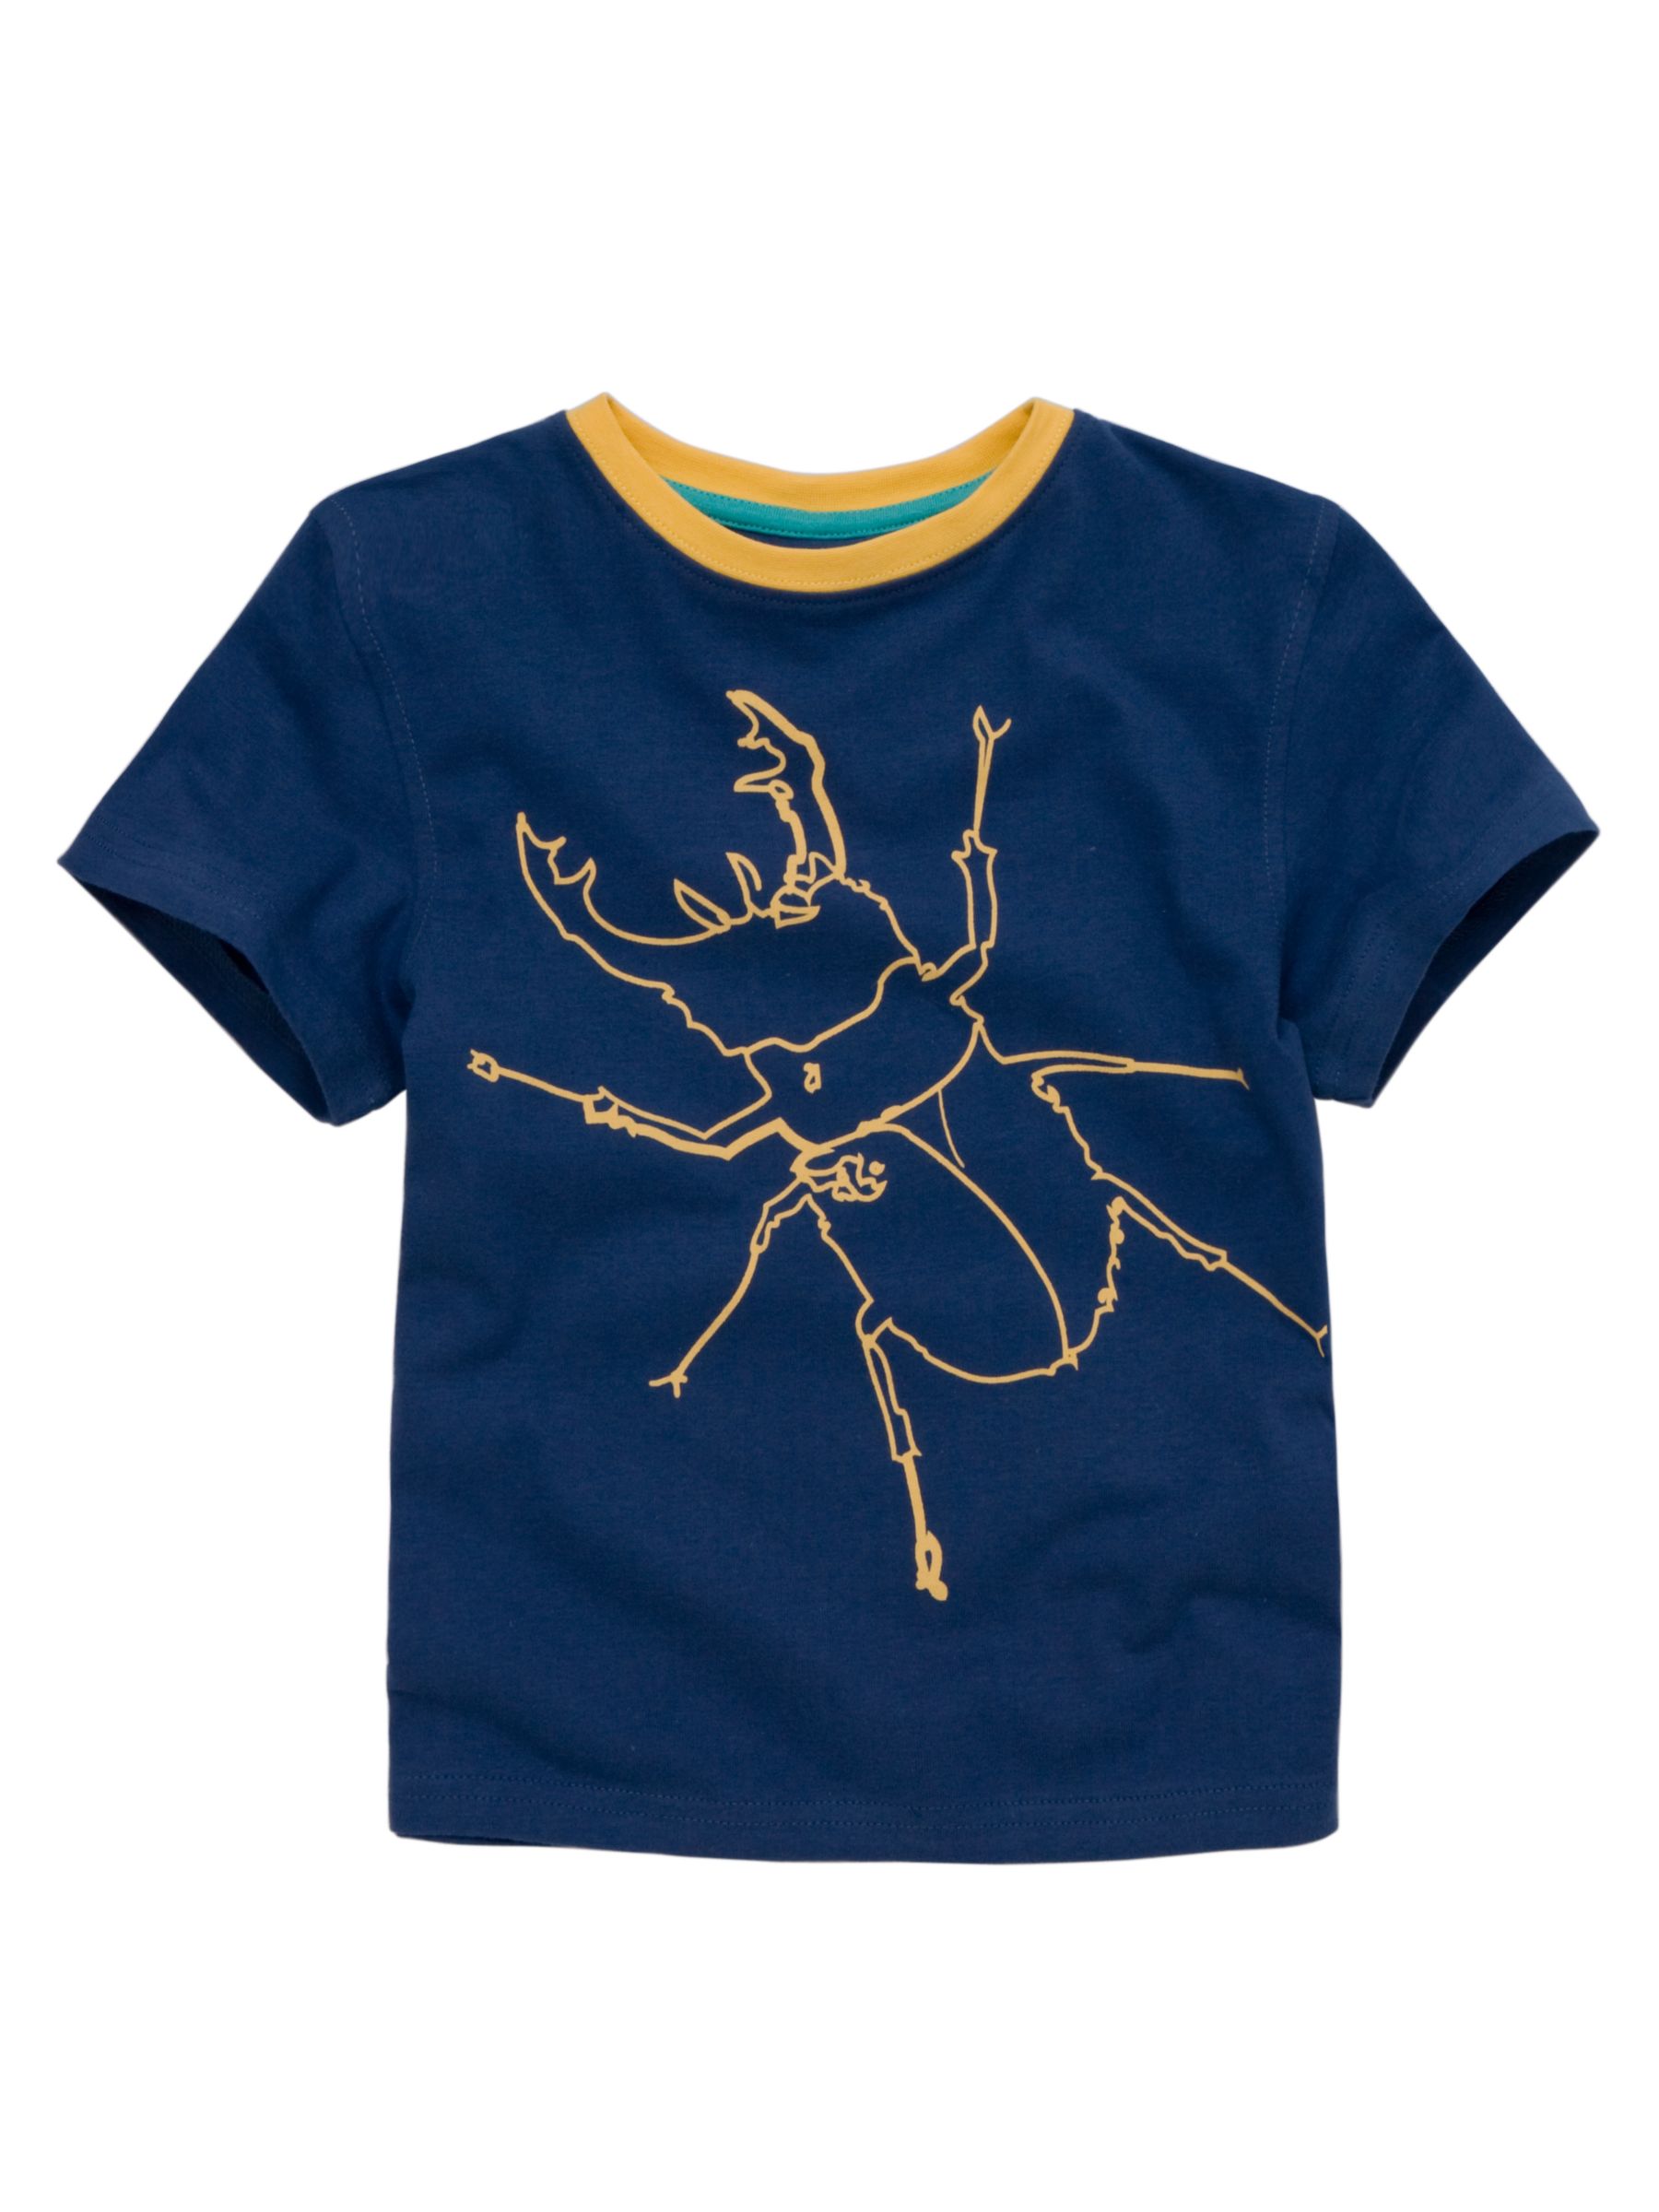 John Lewis Boy Beetle T-Shirt, Navy blue, 3 years